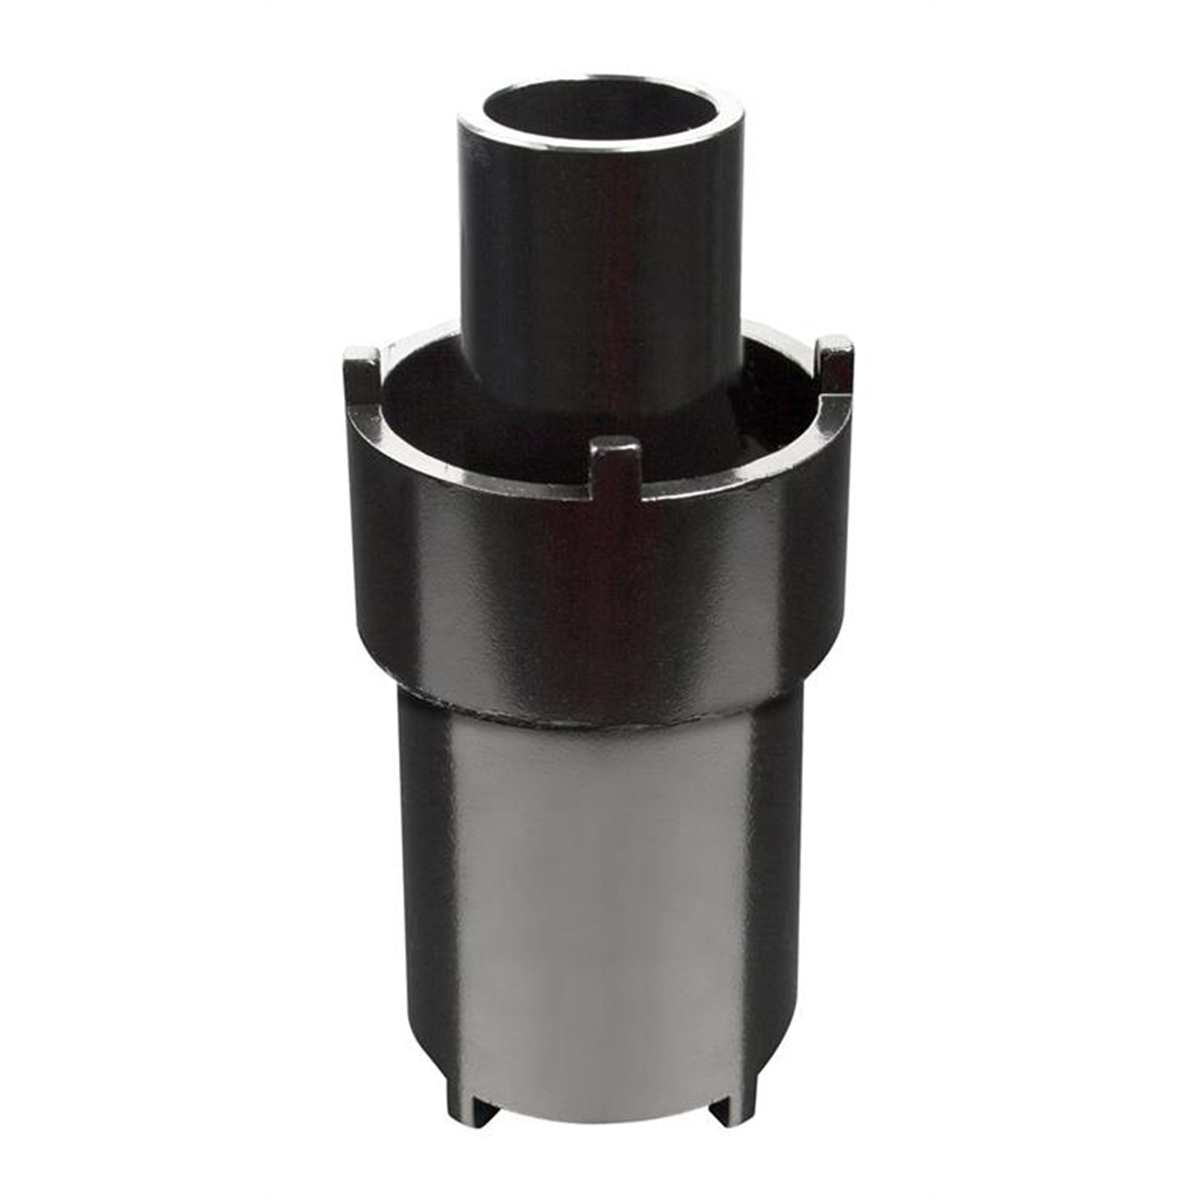 SUNEX TOOLS sunex 10206 2-7/8-inch axle nut spanner socket